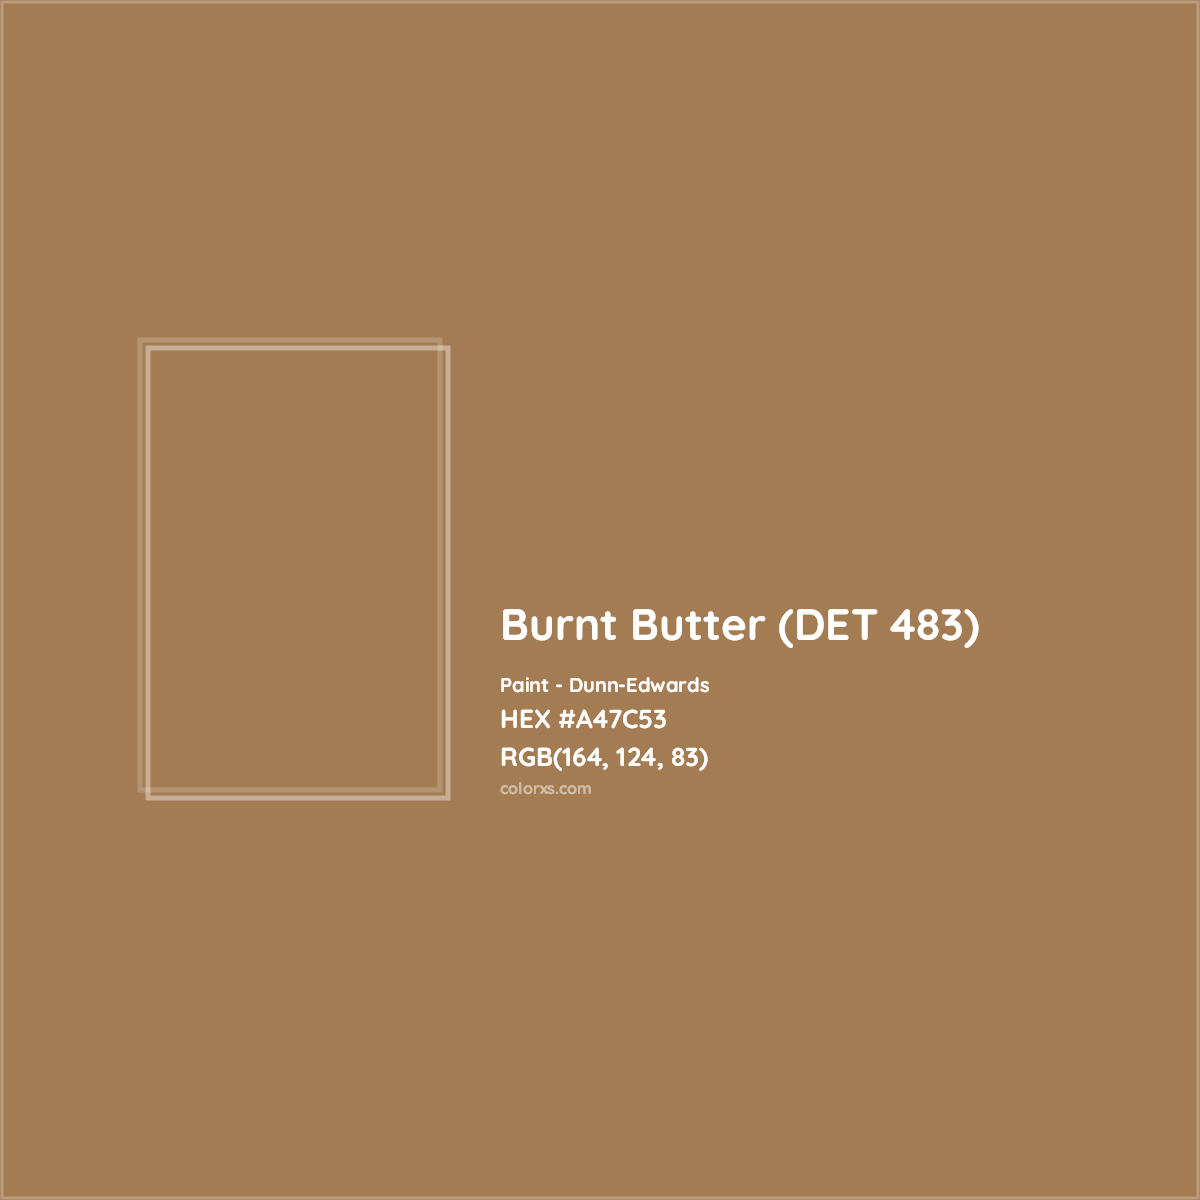 HEX #A47C53 Burnt Butter (DET 483) Paint Dunn-Edwards - Color Code